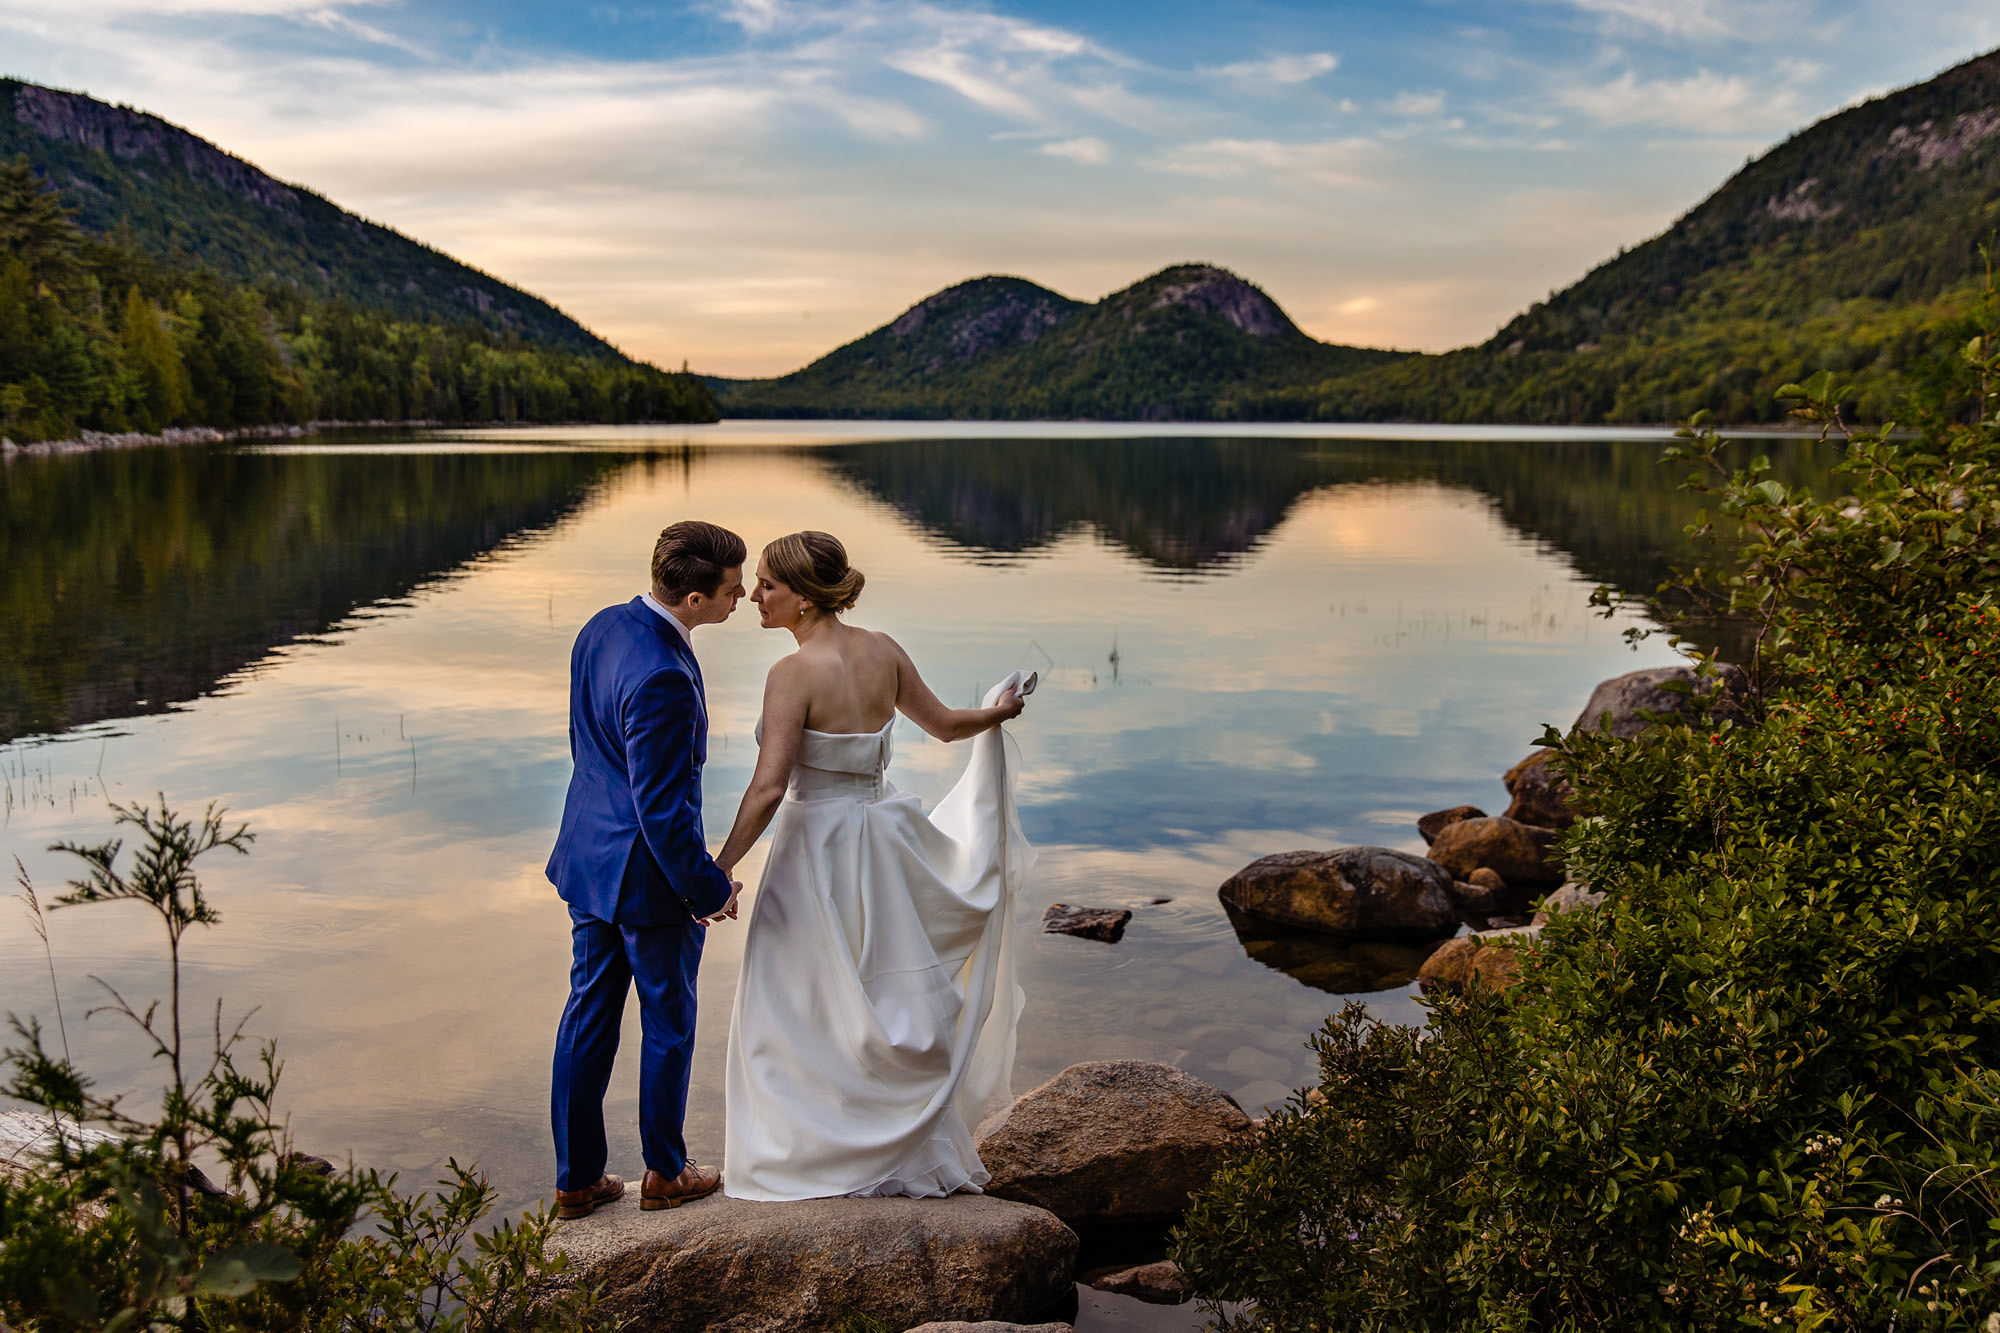 Best Maine wedding photos of 2021